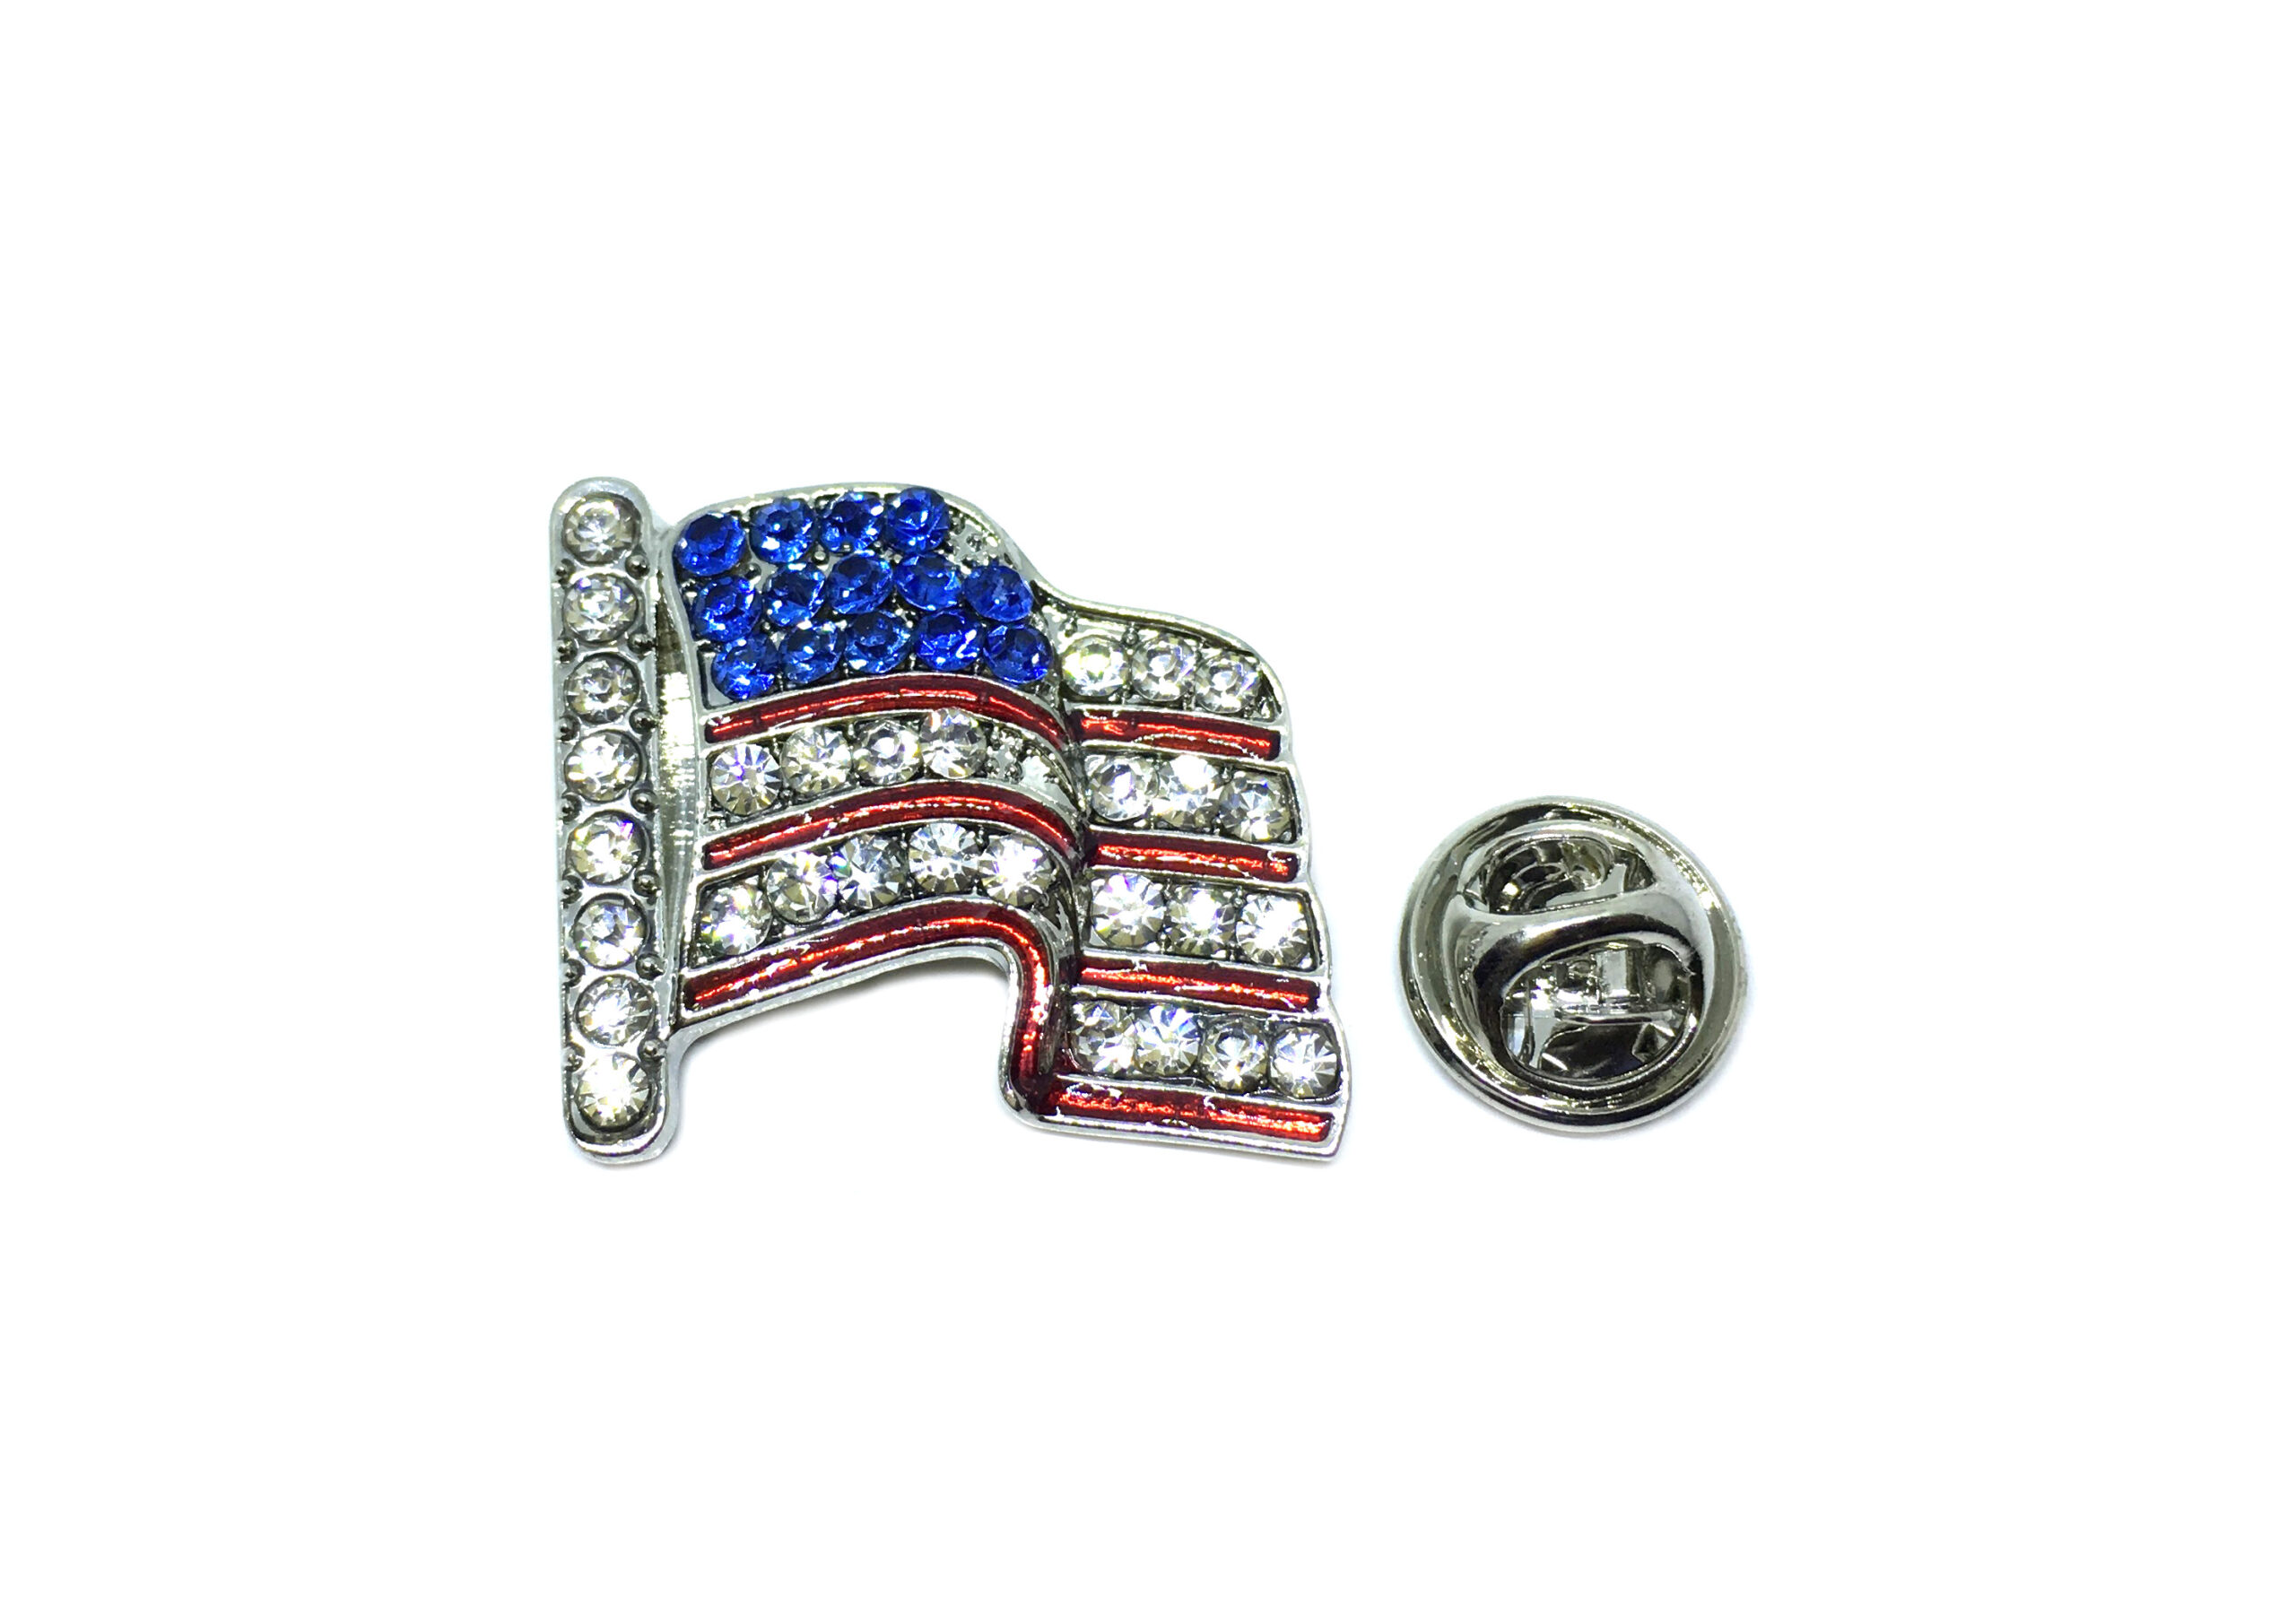 FPTR-019 Patriotic Crystal American Flag Pin